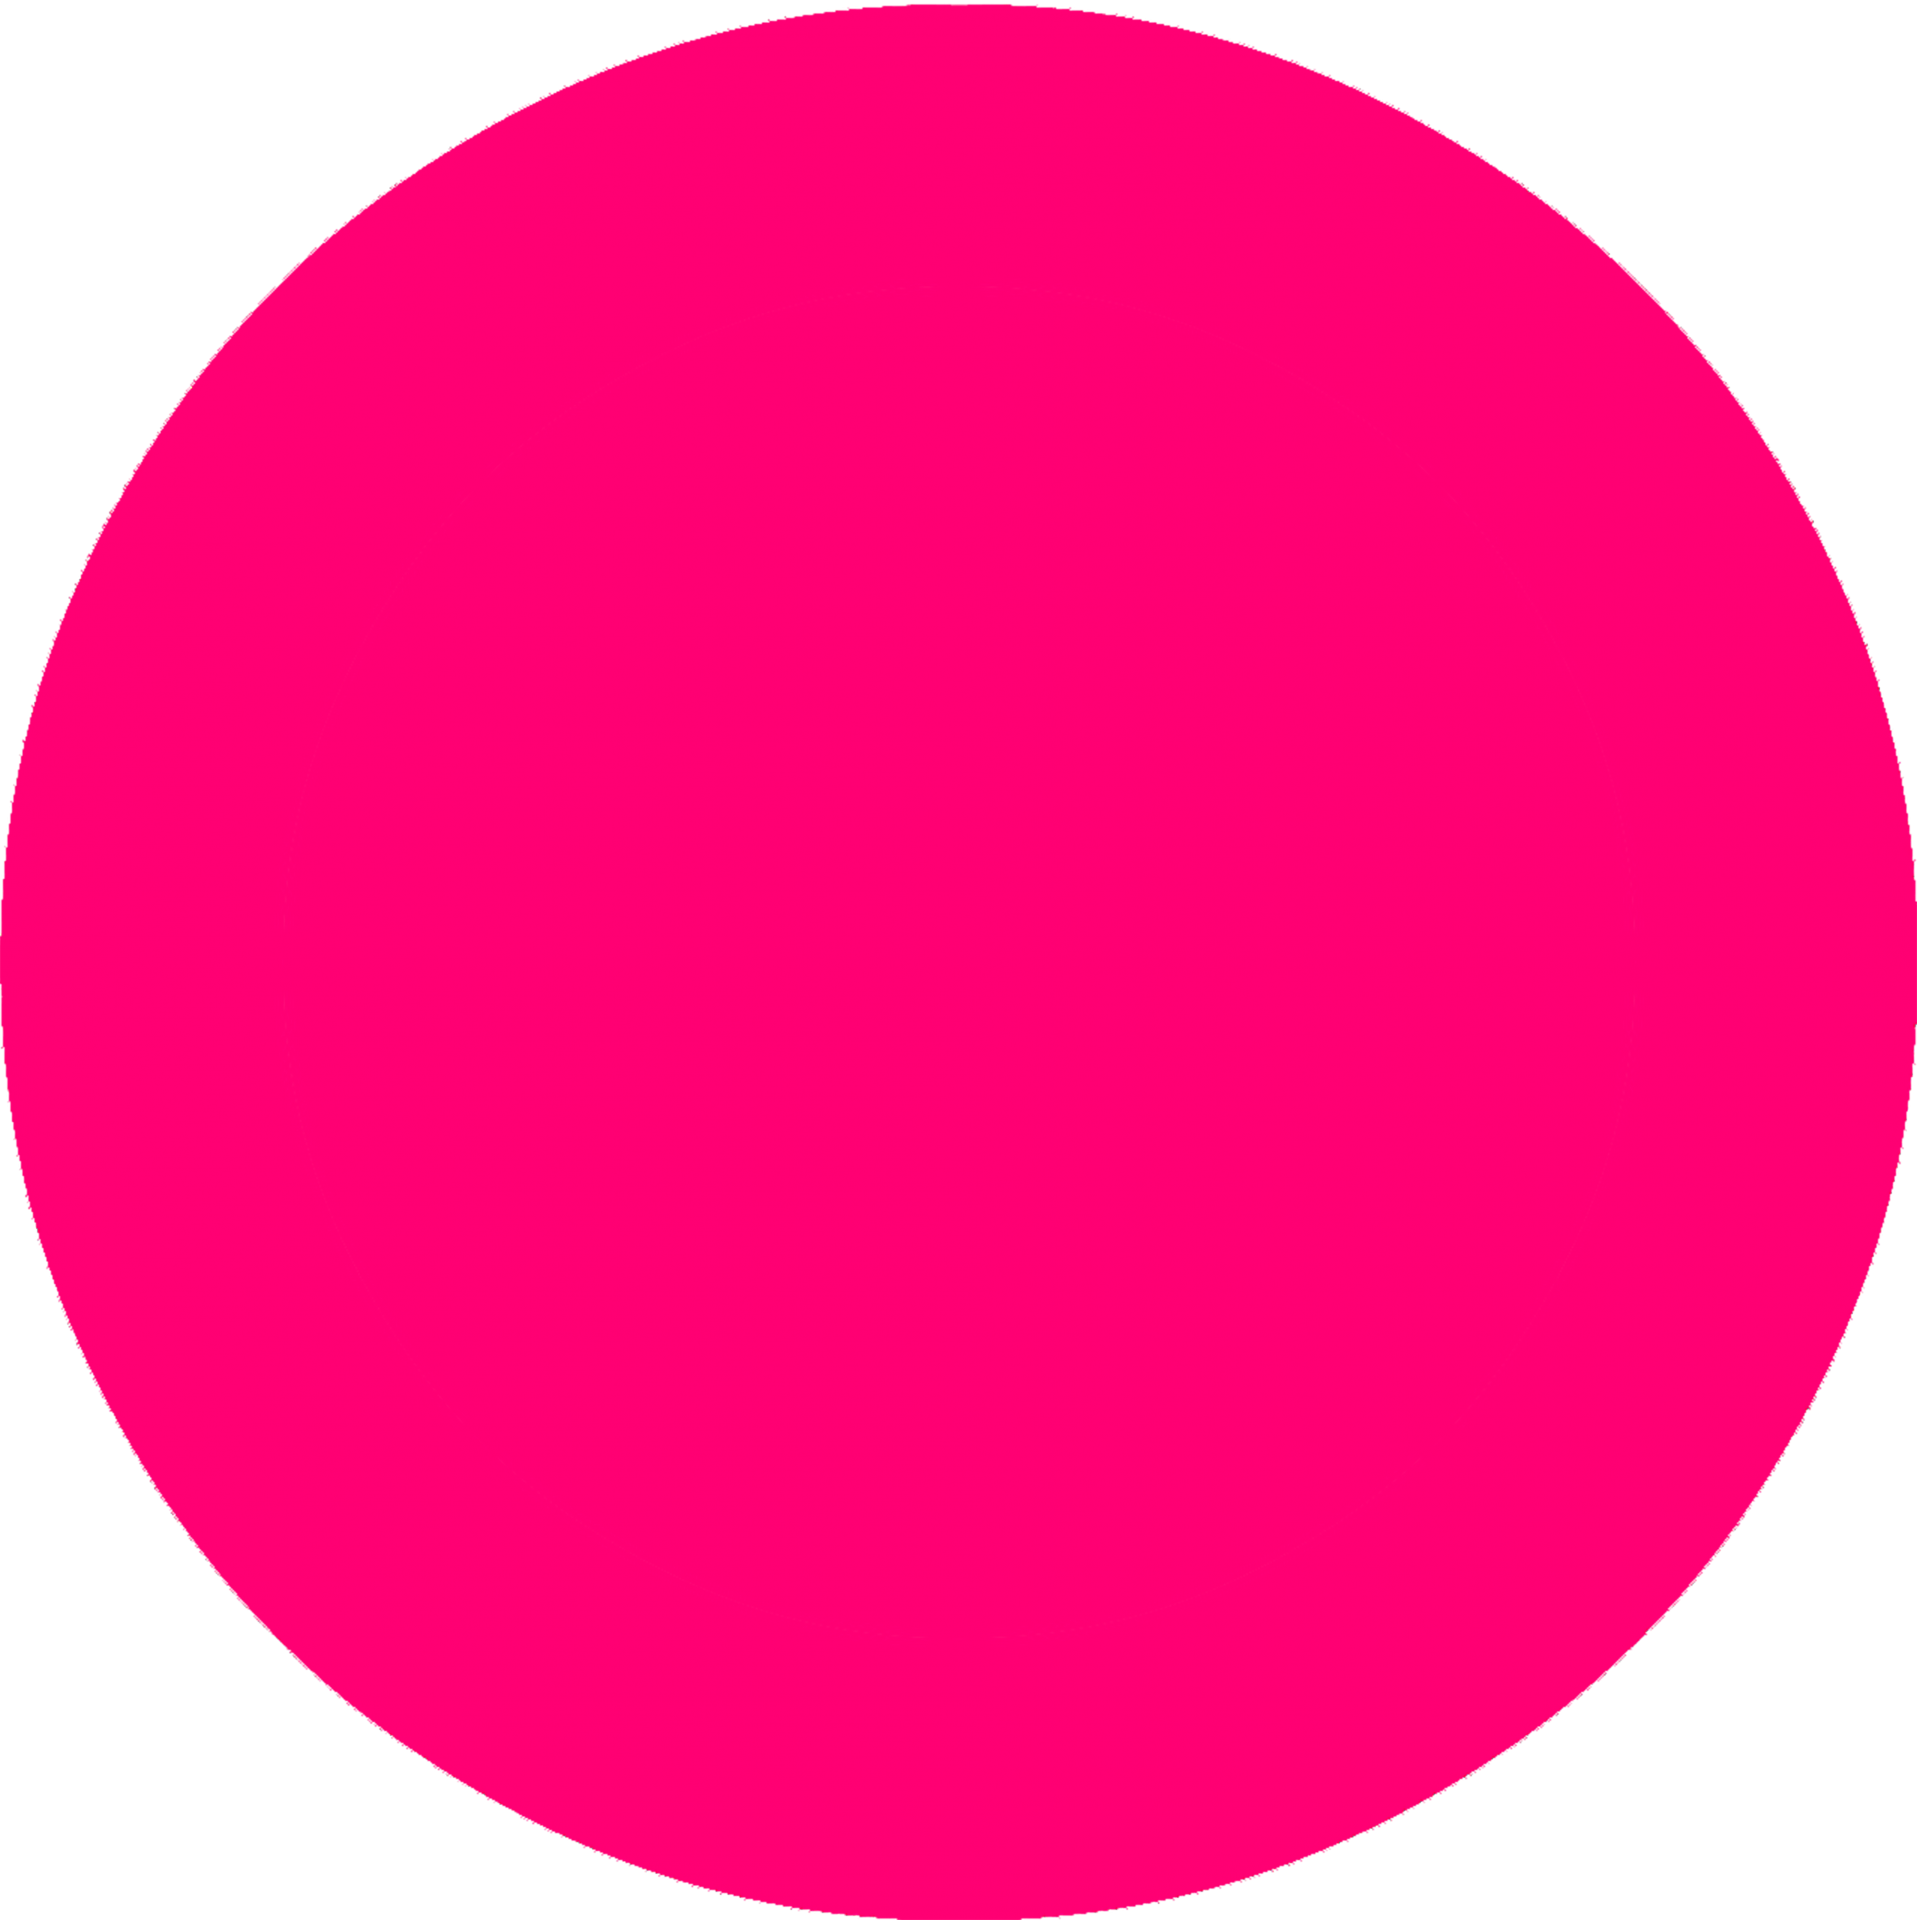 Cercle rose